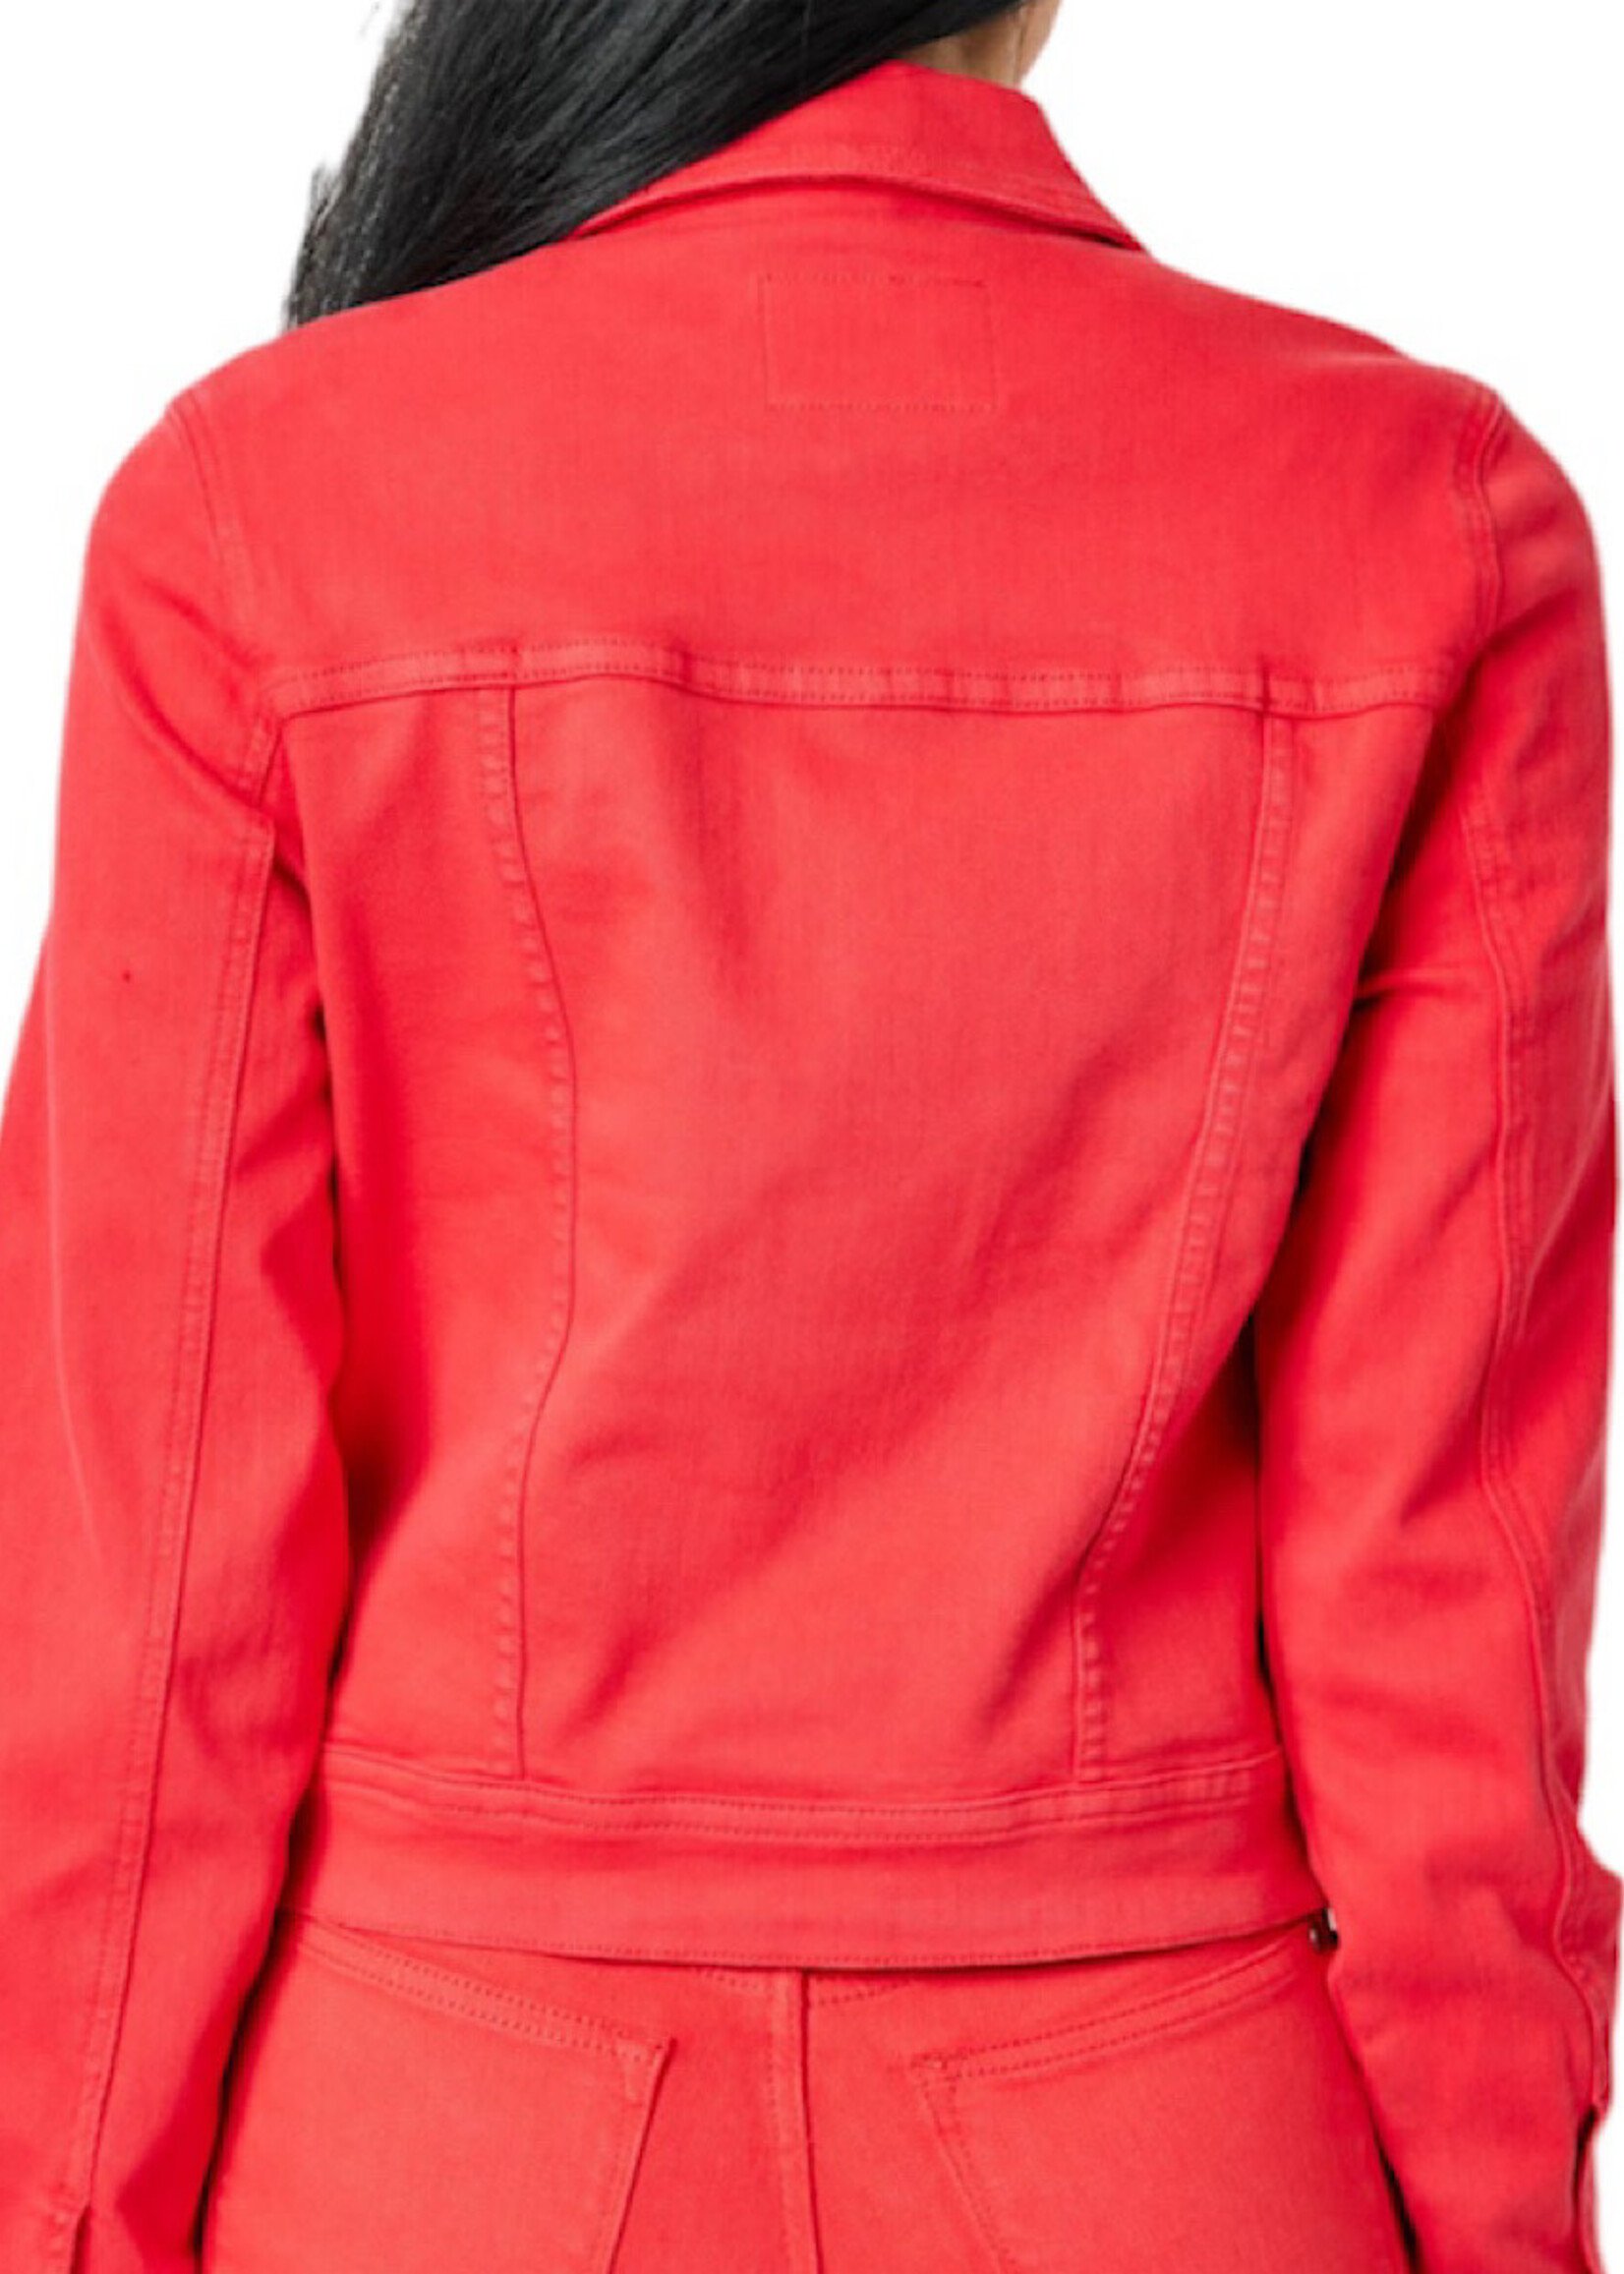 Judy Blue Judy Blue Red Garment Dyed Jacket JB7873